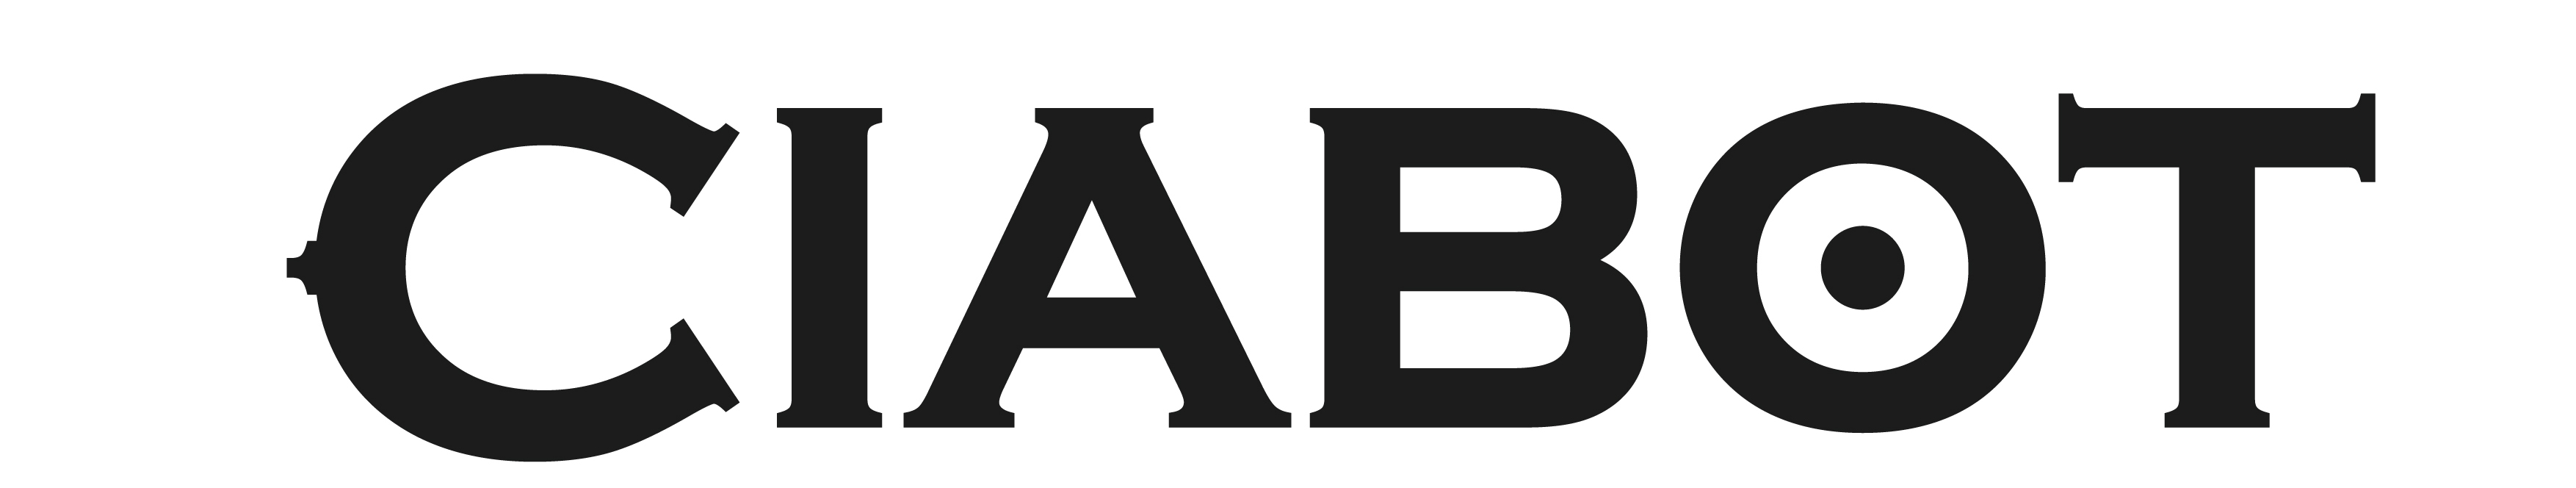 Ciabot logo